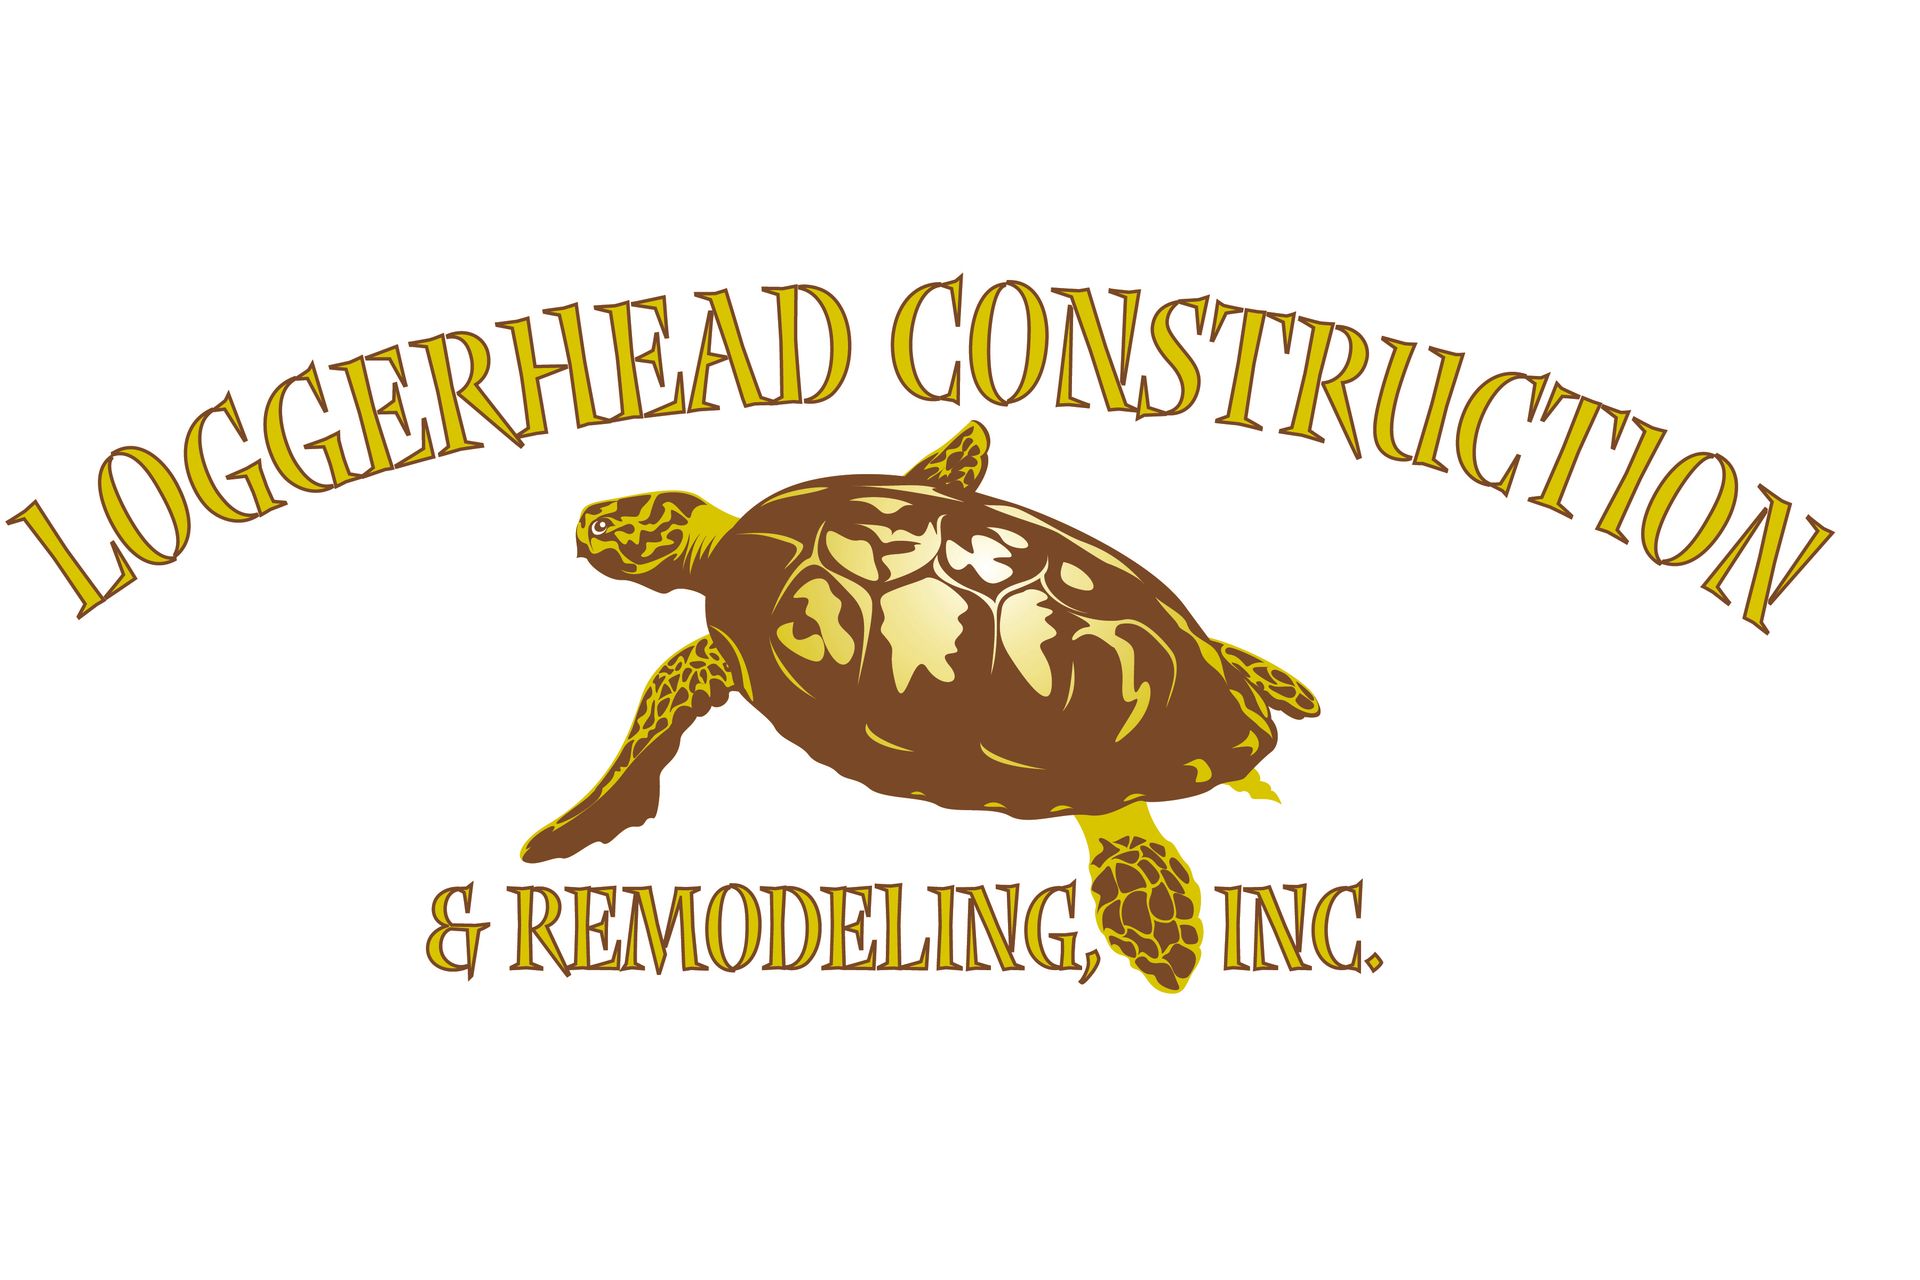 Loggerhead Construction & Remodeling, Inc